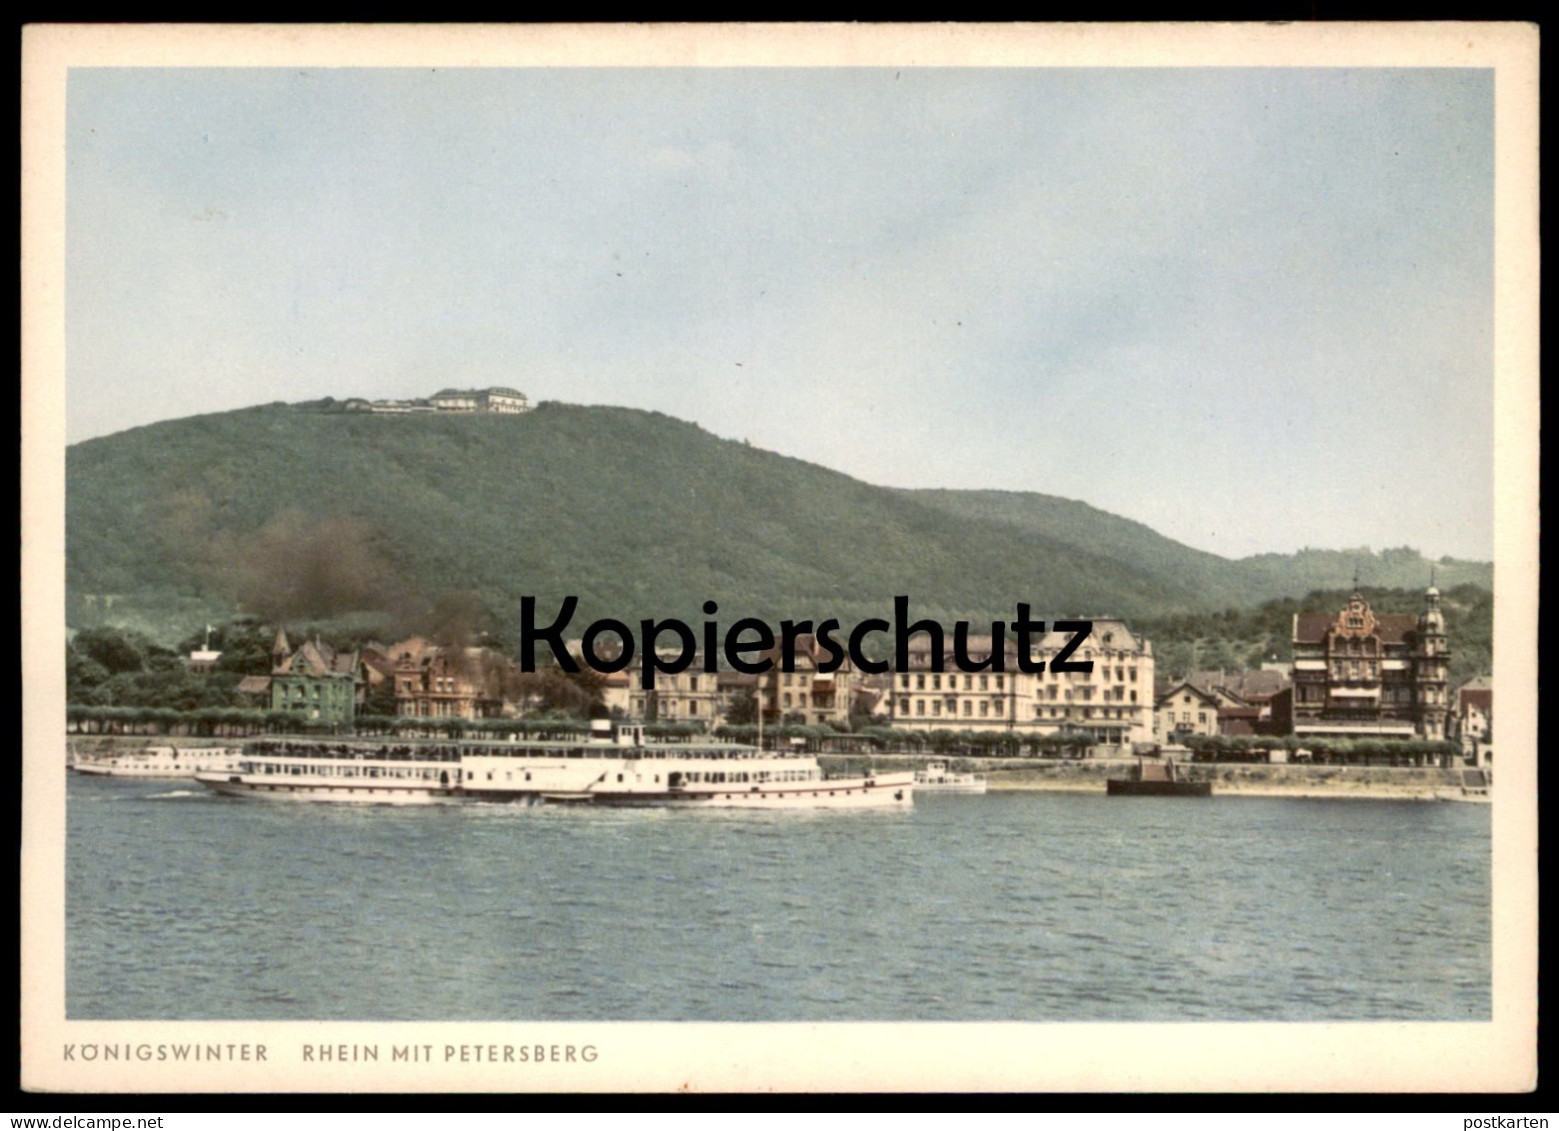 ALTE POSTKARTE KÖNIGSWINTER AM RHEIN MIT PETERSBERG SCHIFF FOTO HANS HARTZ Ship Rhine Rhin Rijn Ansichtskarte Postcard - Koenigswinter